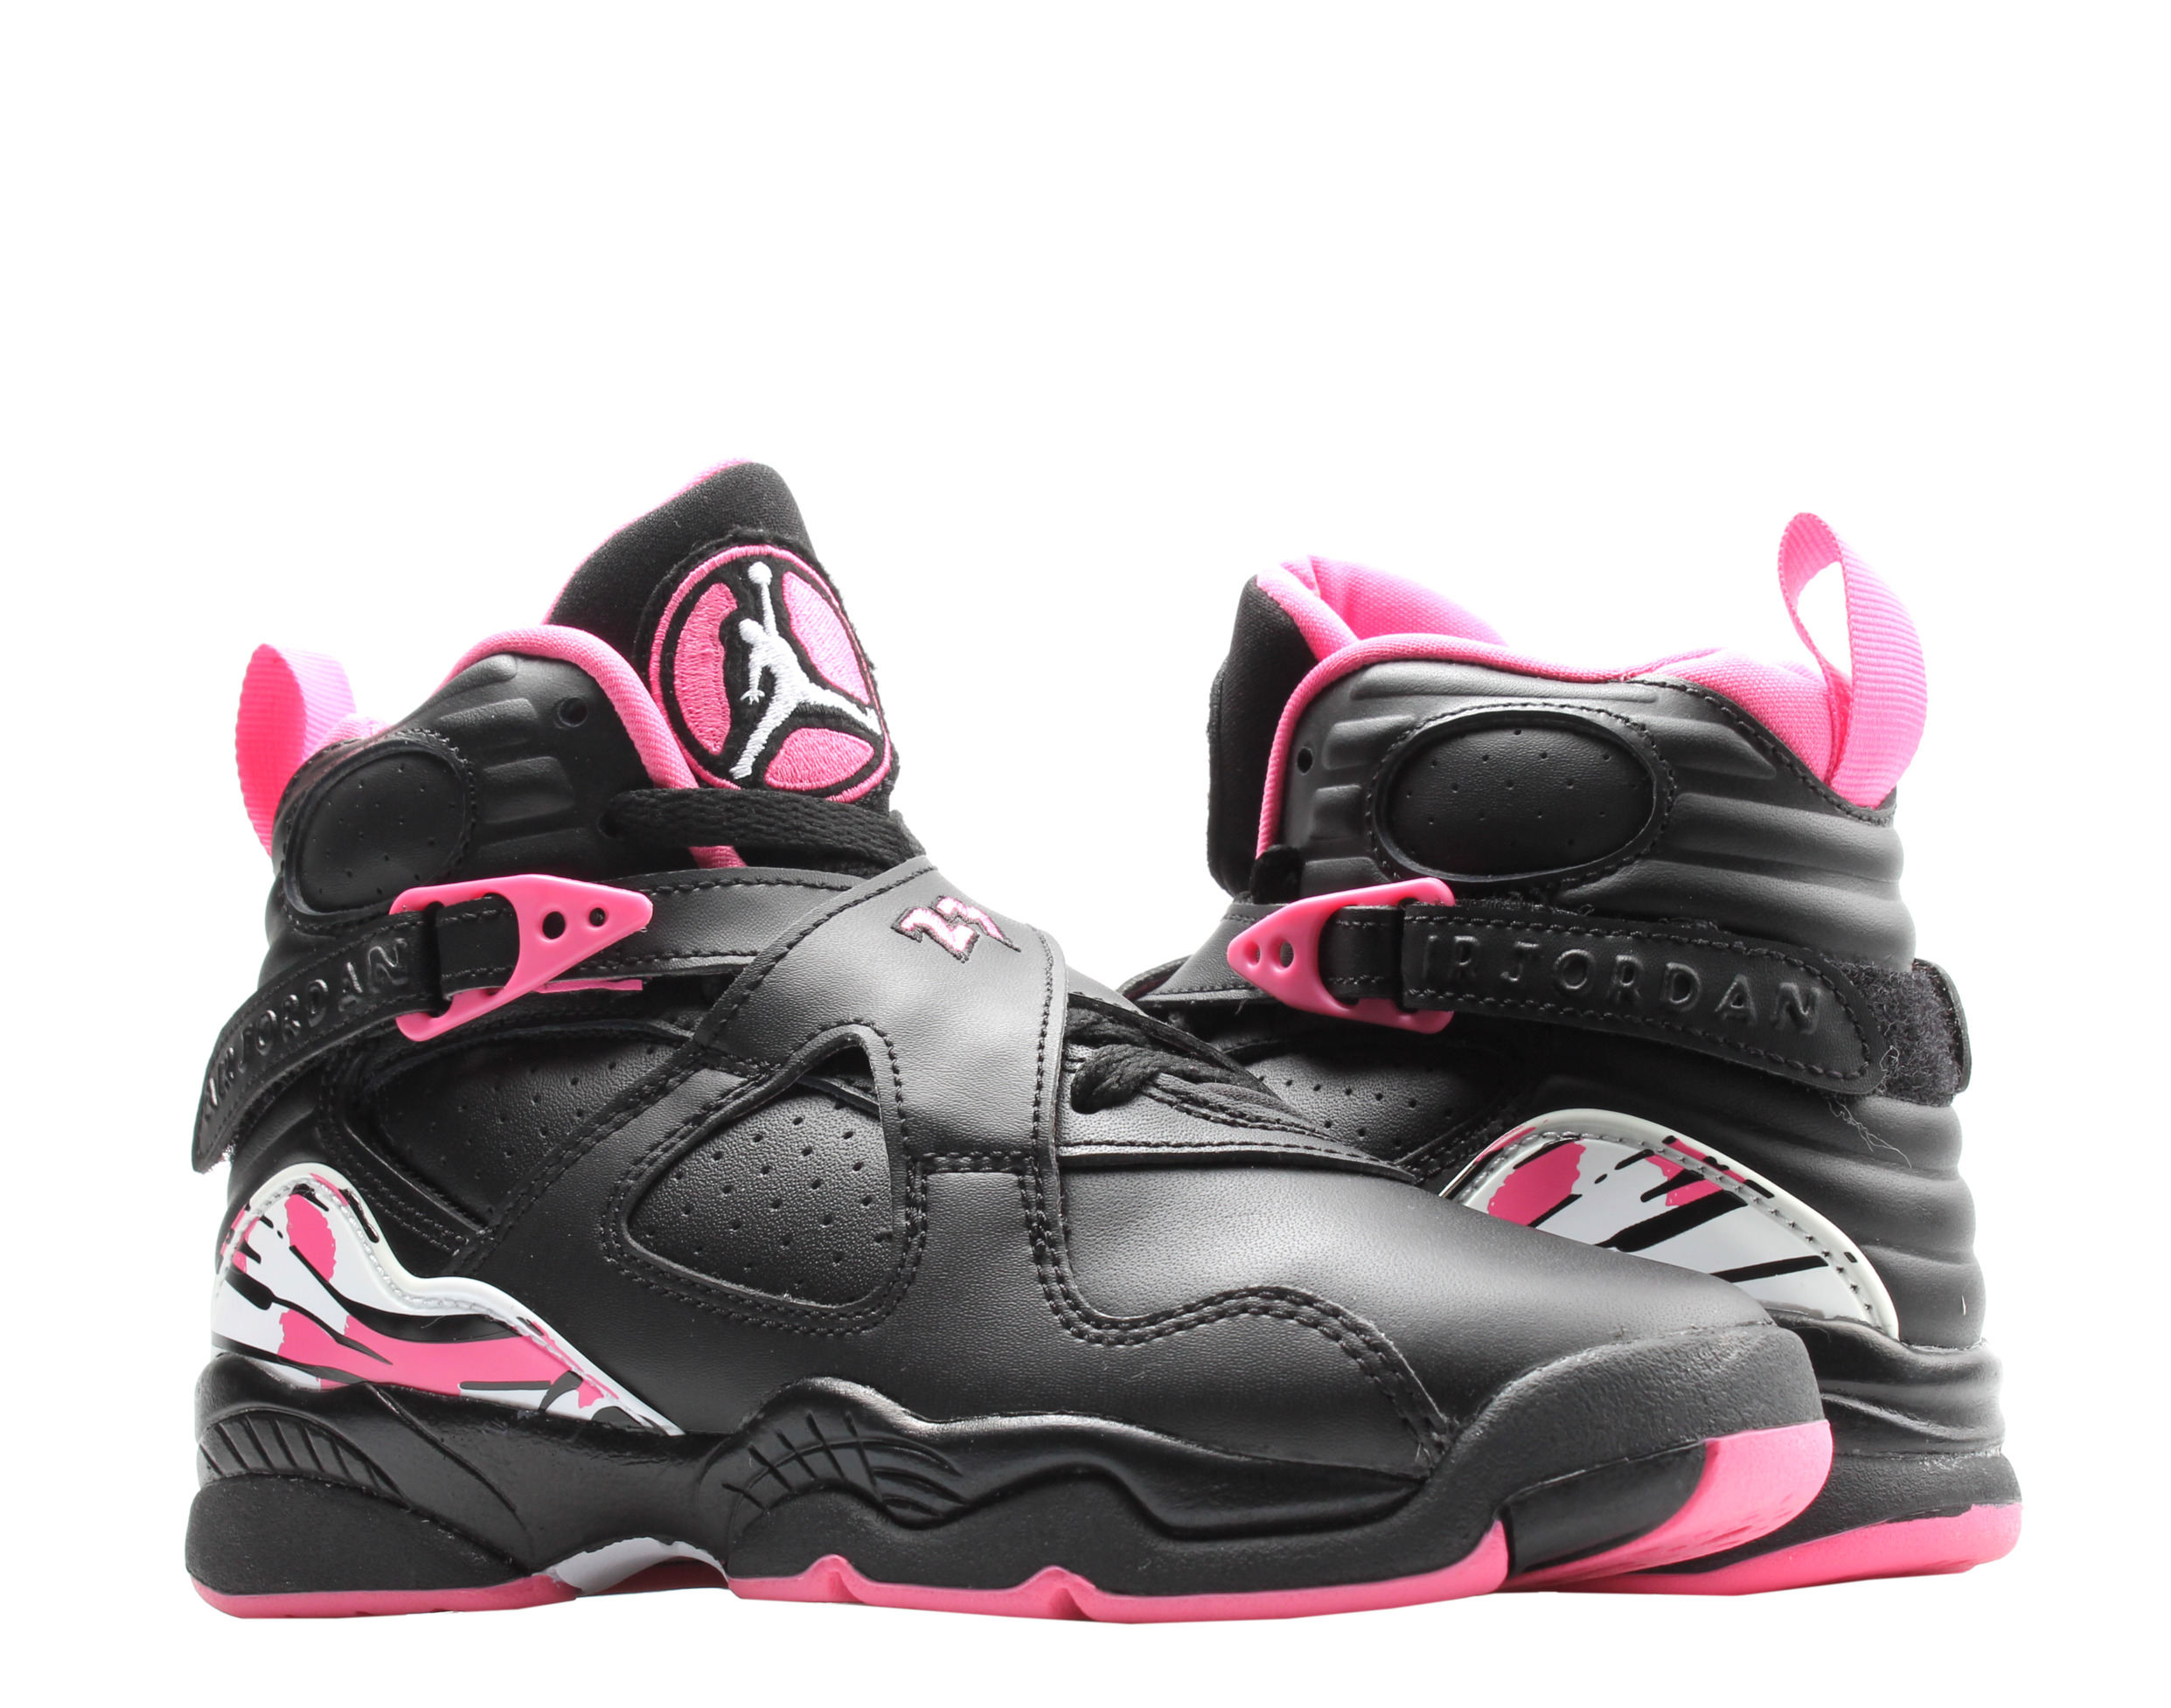 Nike Air Jordan 8 Retro (GS) Big Girls Basketball Shoes Size 6 - image 1 of 6